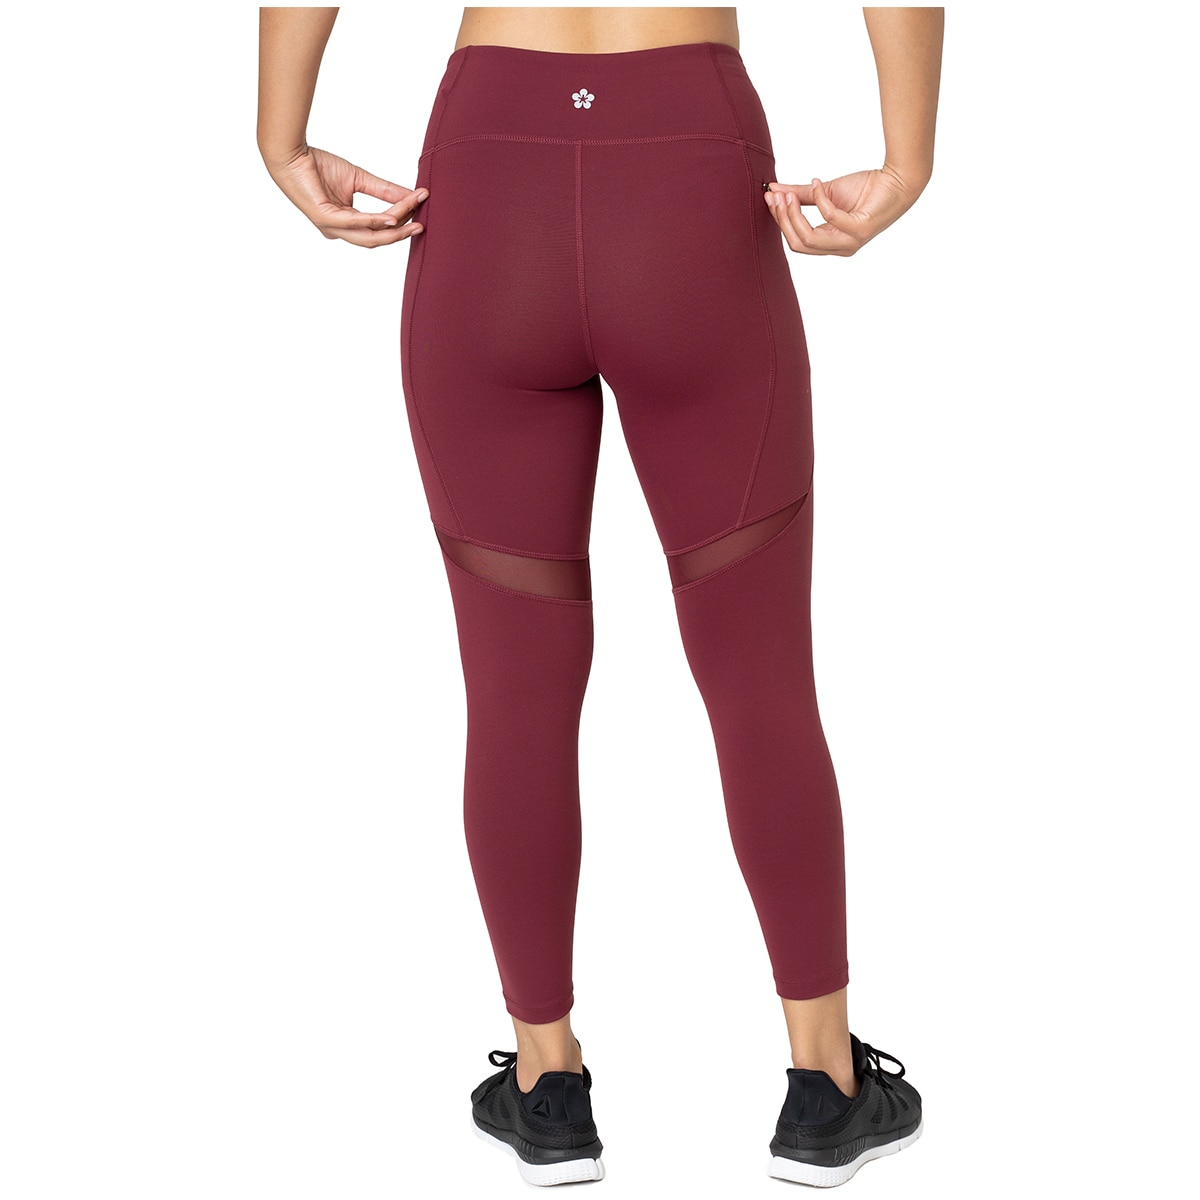 Costco: Tuff Athletics Yoga Pant - $13.99 (Save $5.00) 